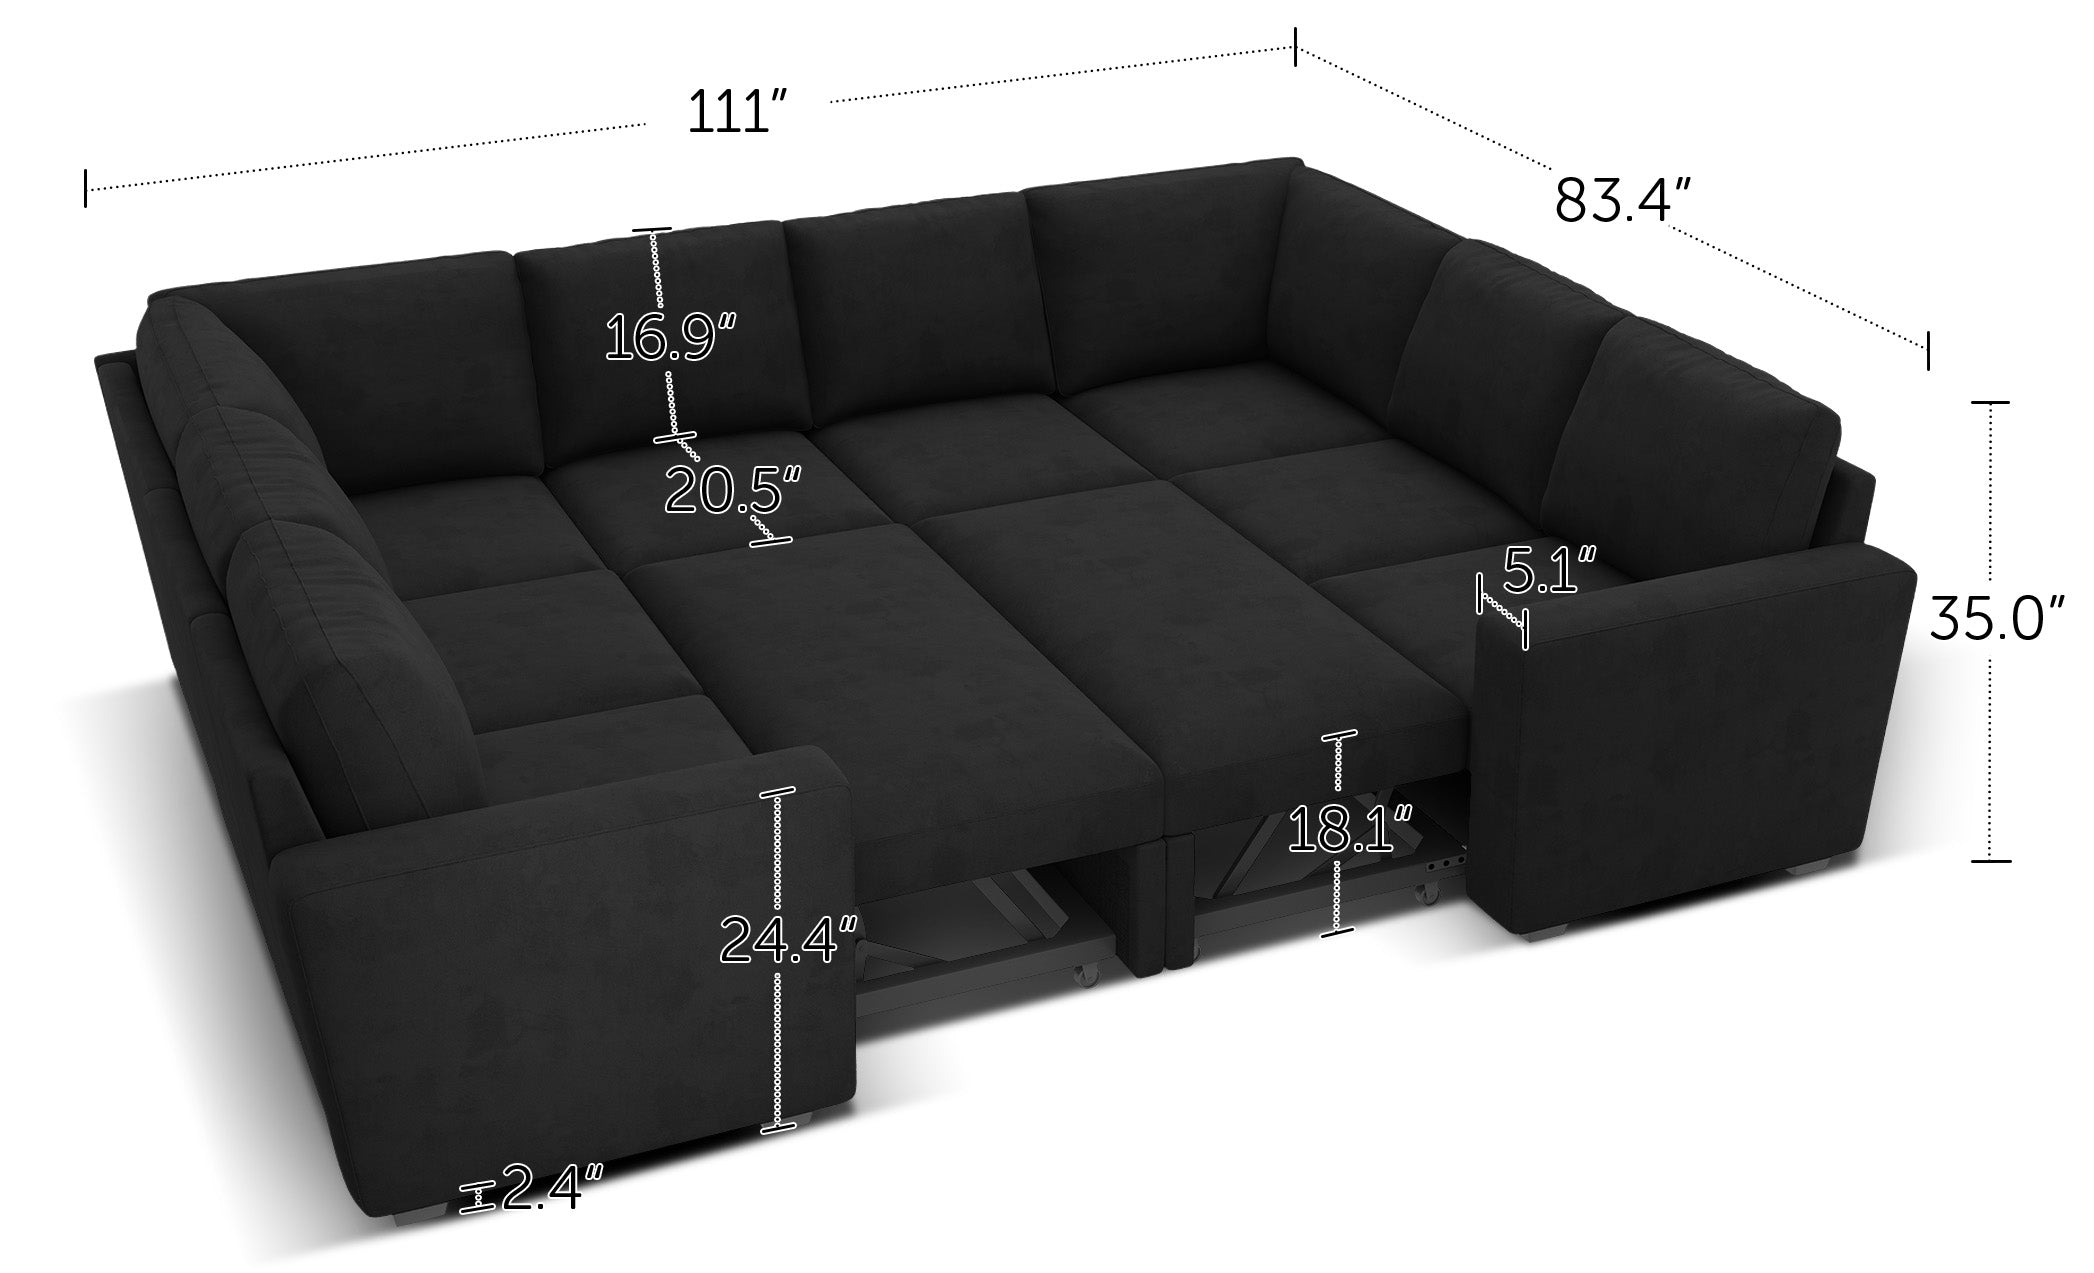 HONBAY 8-Piece Velvet Modular Sleeper Sectional With Storage Space